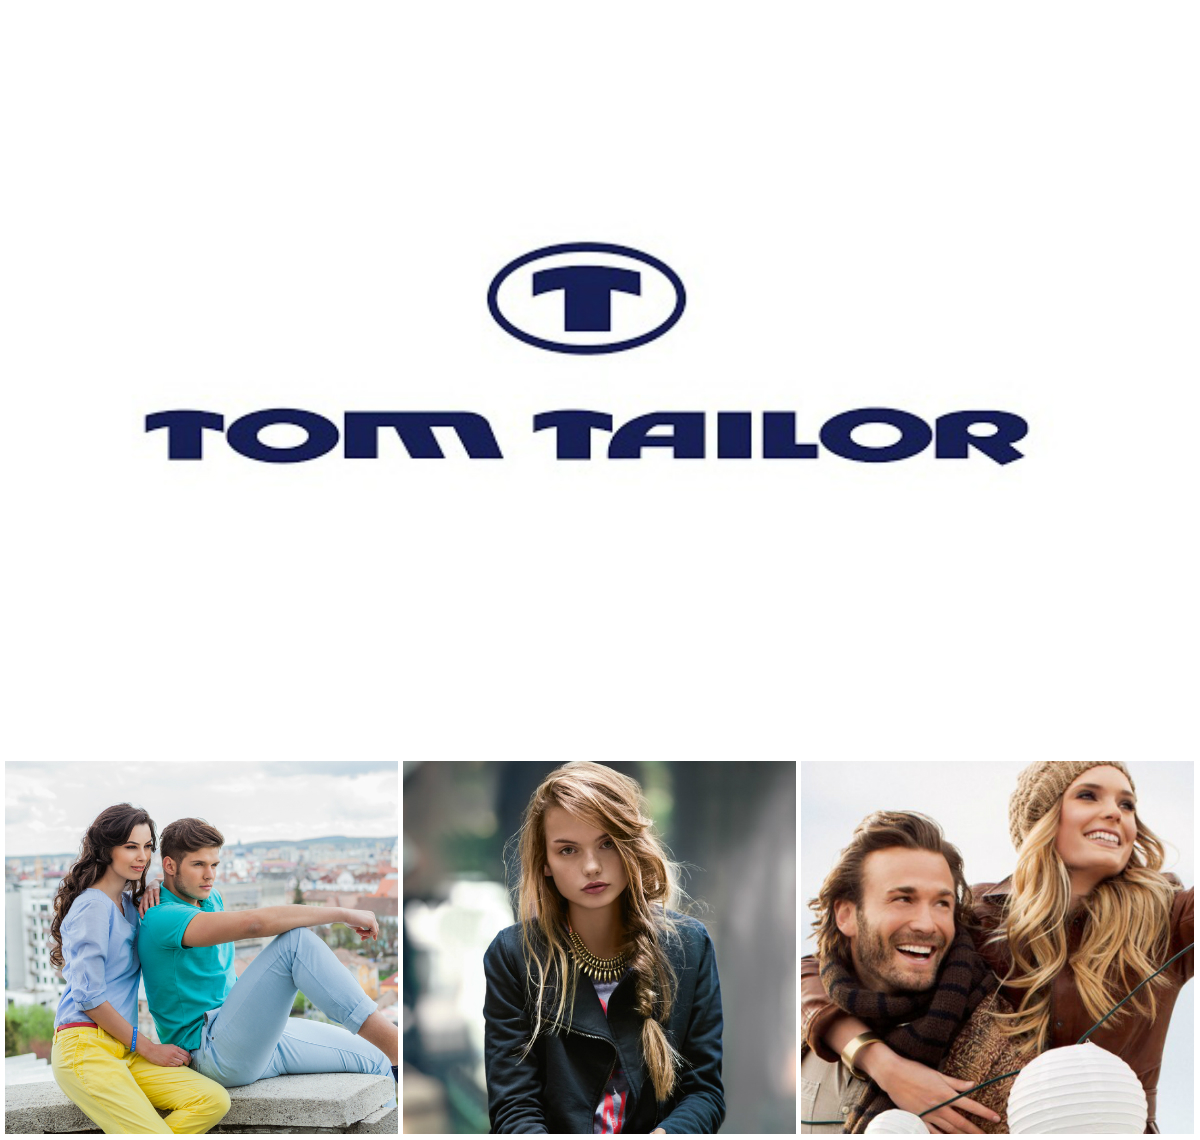 Том тейлор чей. Бренд одежды Tom Tailor. Tom Tailor логотип. Tom Tailor 957872.